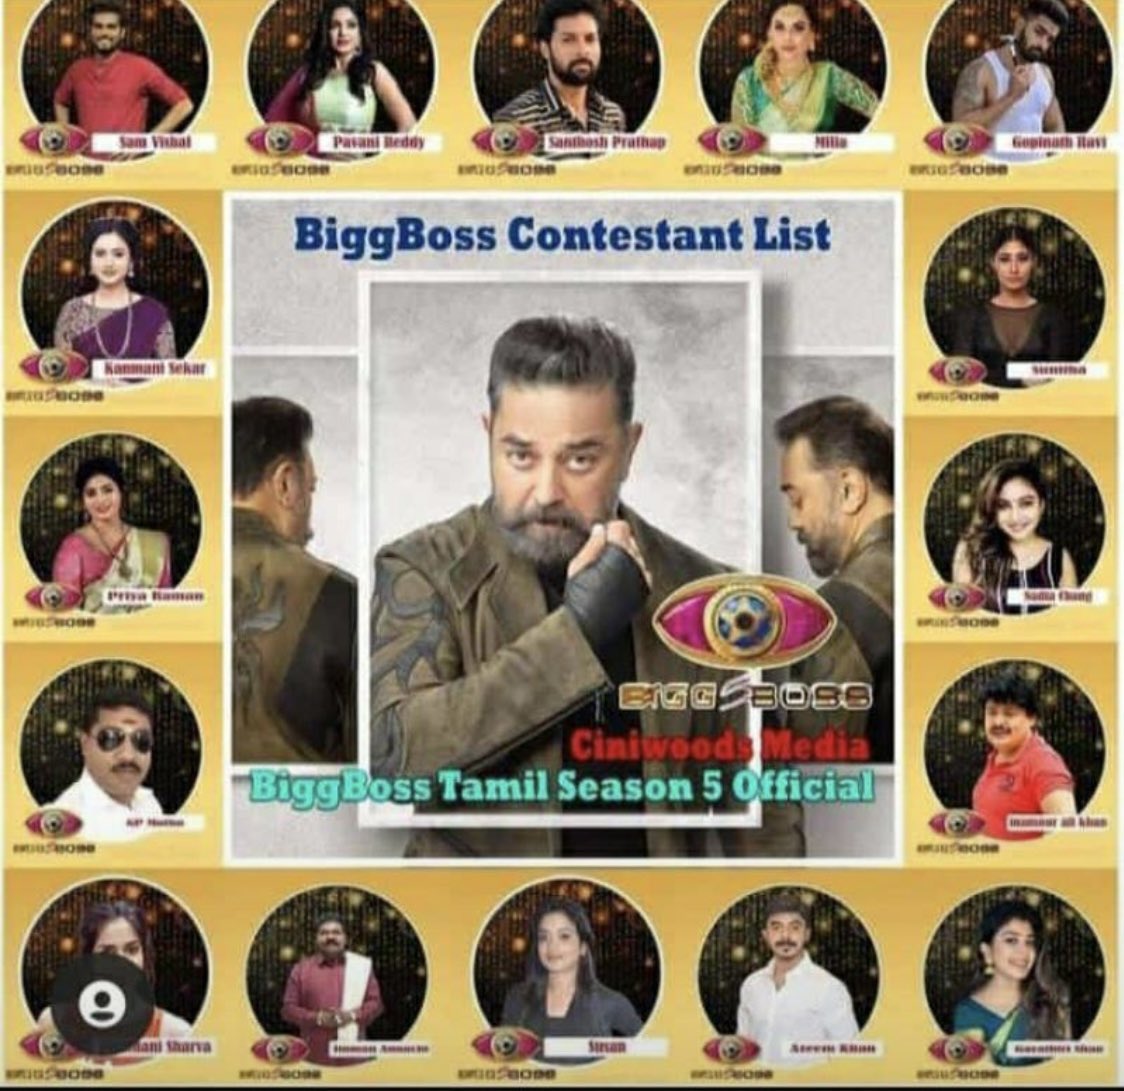 Name list boss bigg contestants season tamil 5 Bigg Boss